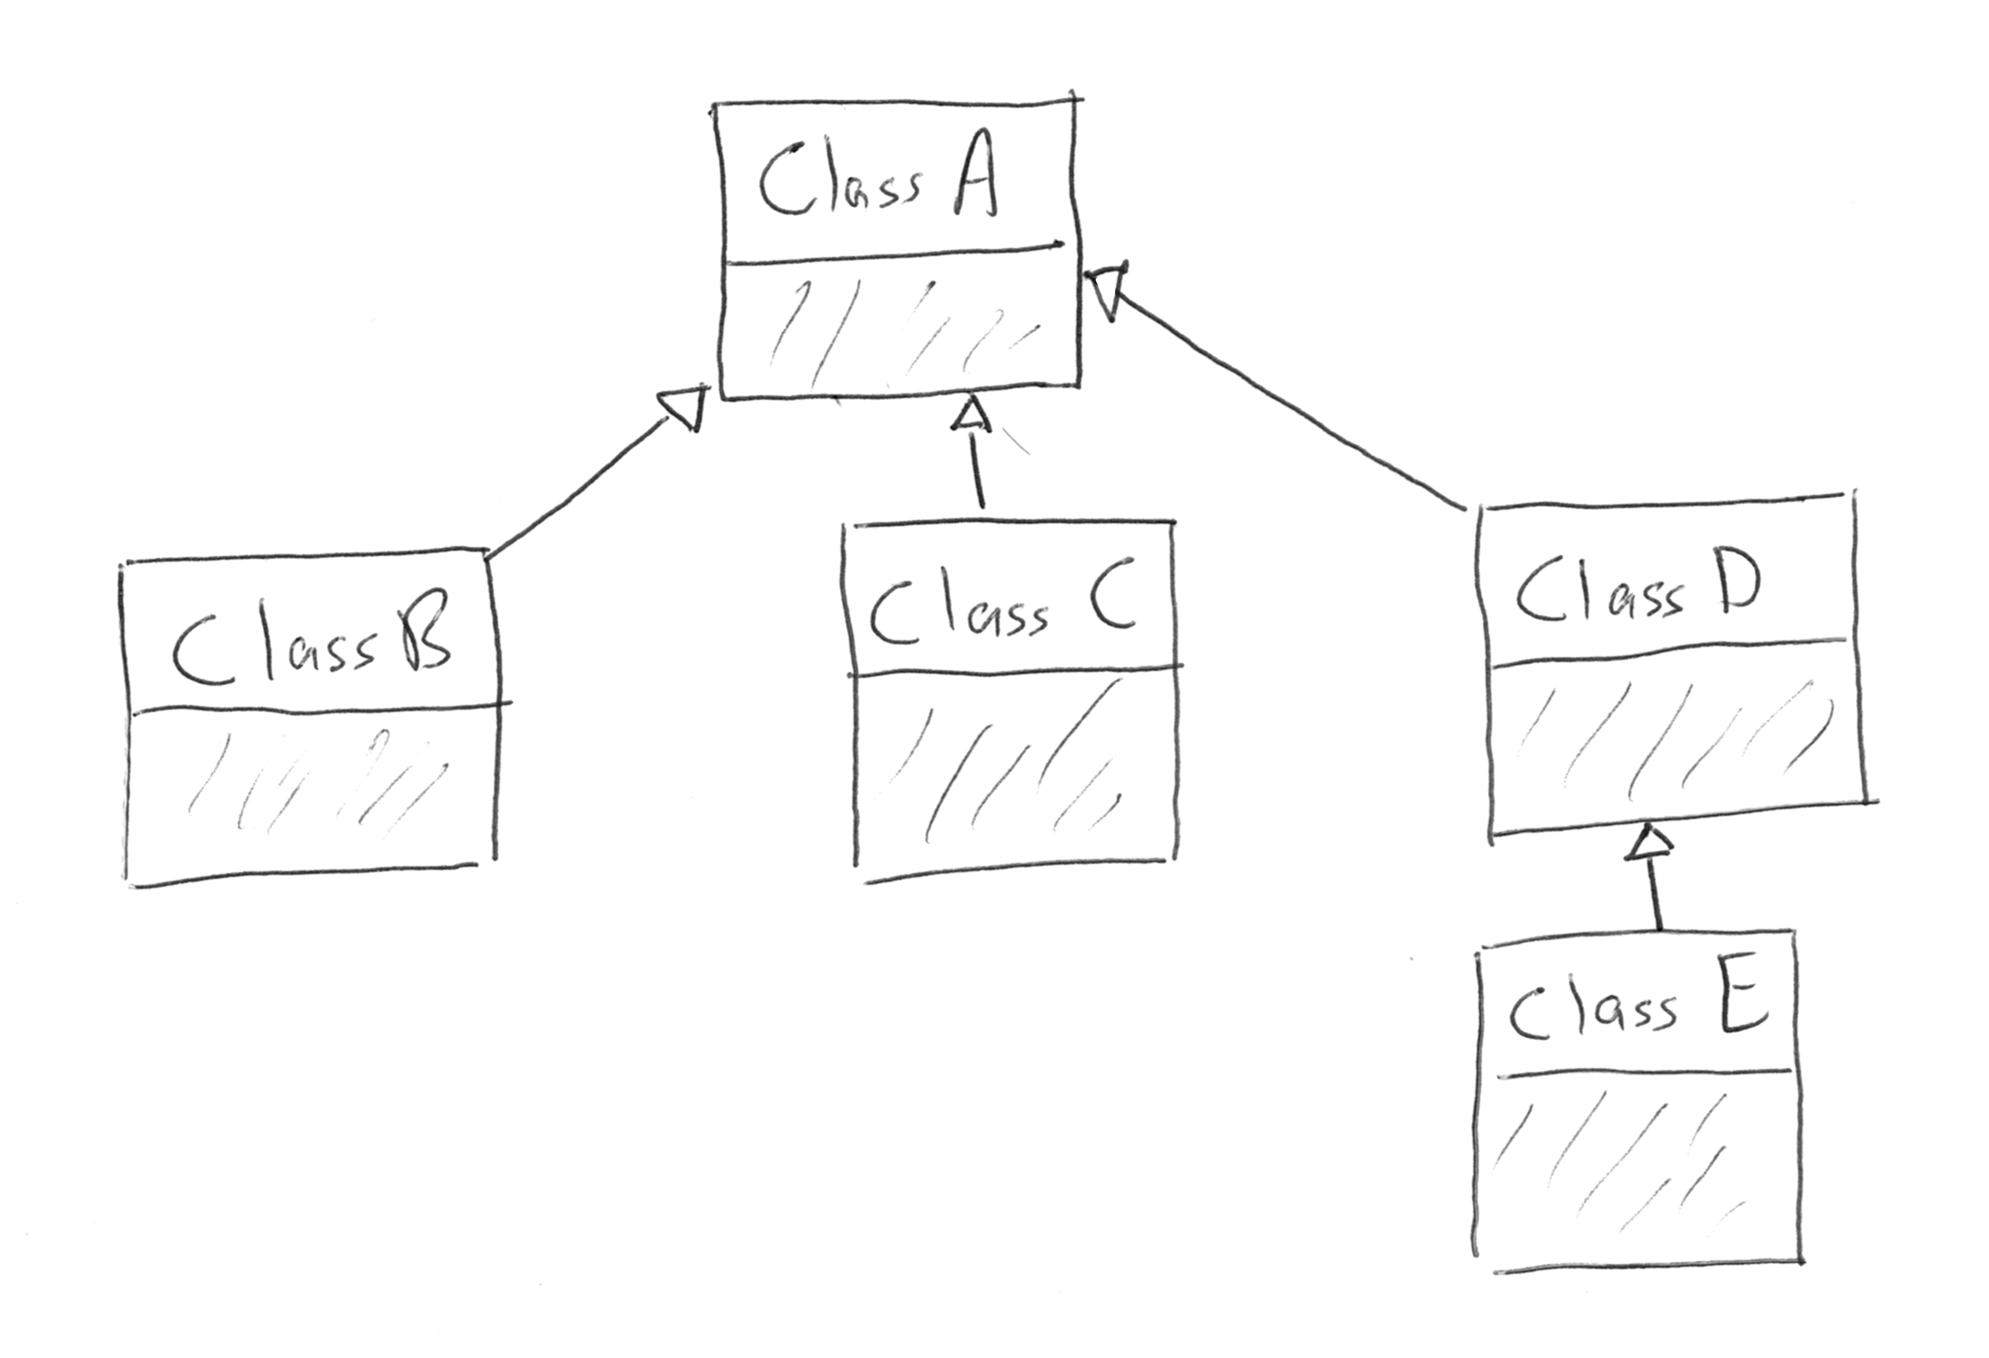 Multi-node inheritance tree.